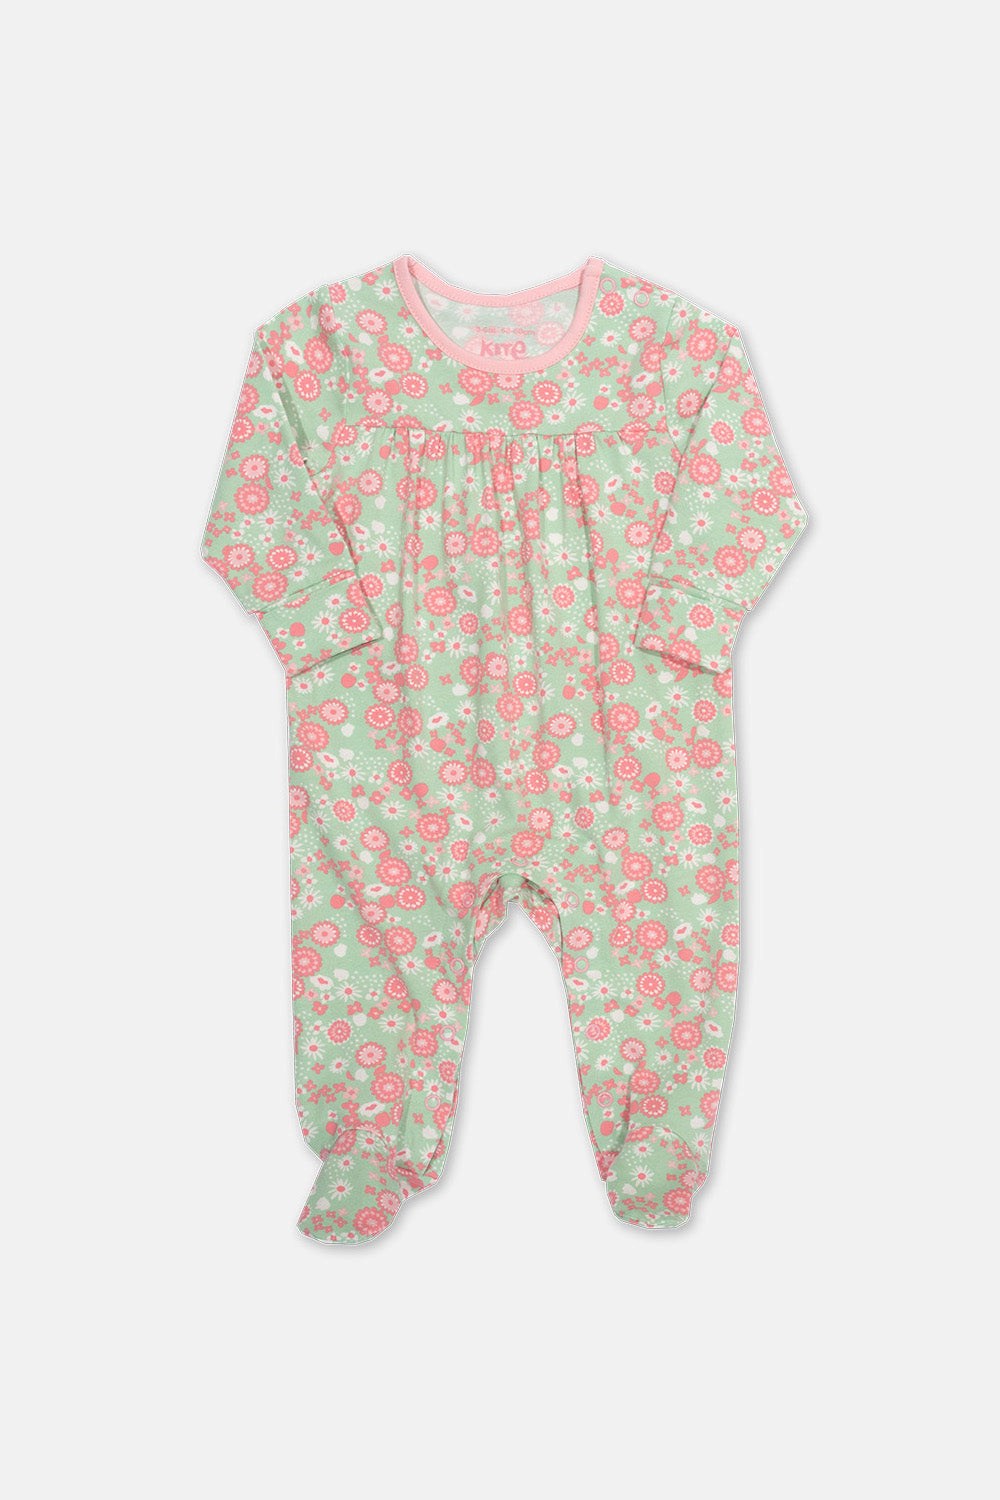 Baby Love Organic Cotton Sleepsuit -